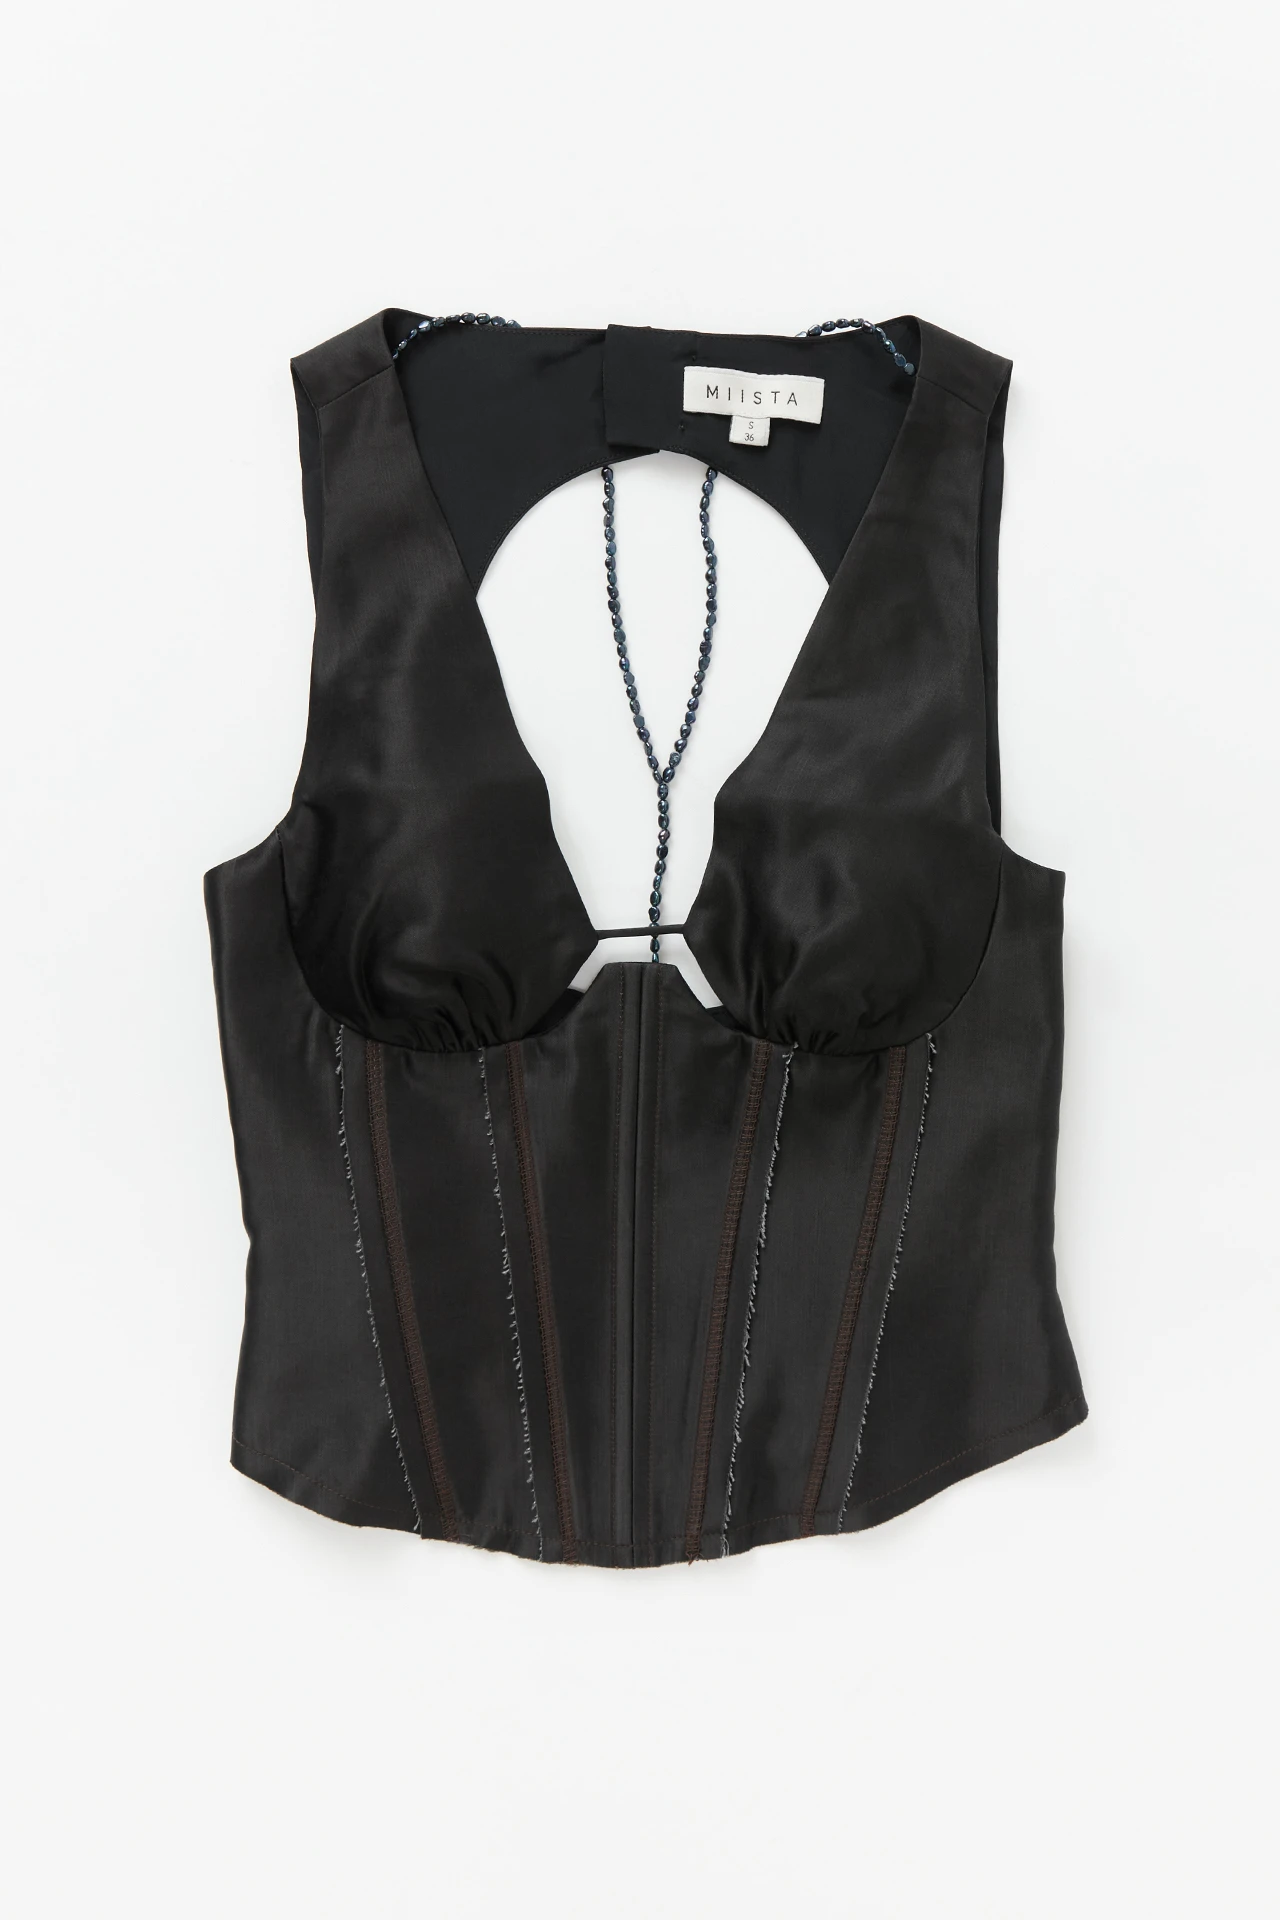 miista-elisa-black-corset-1